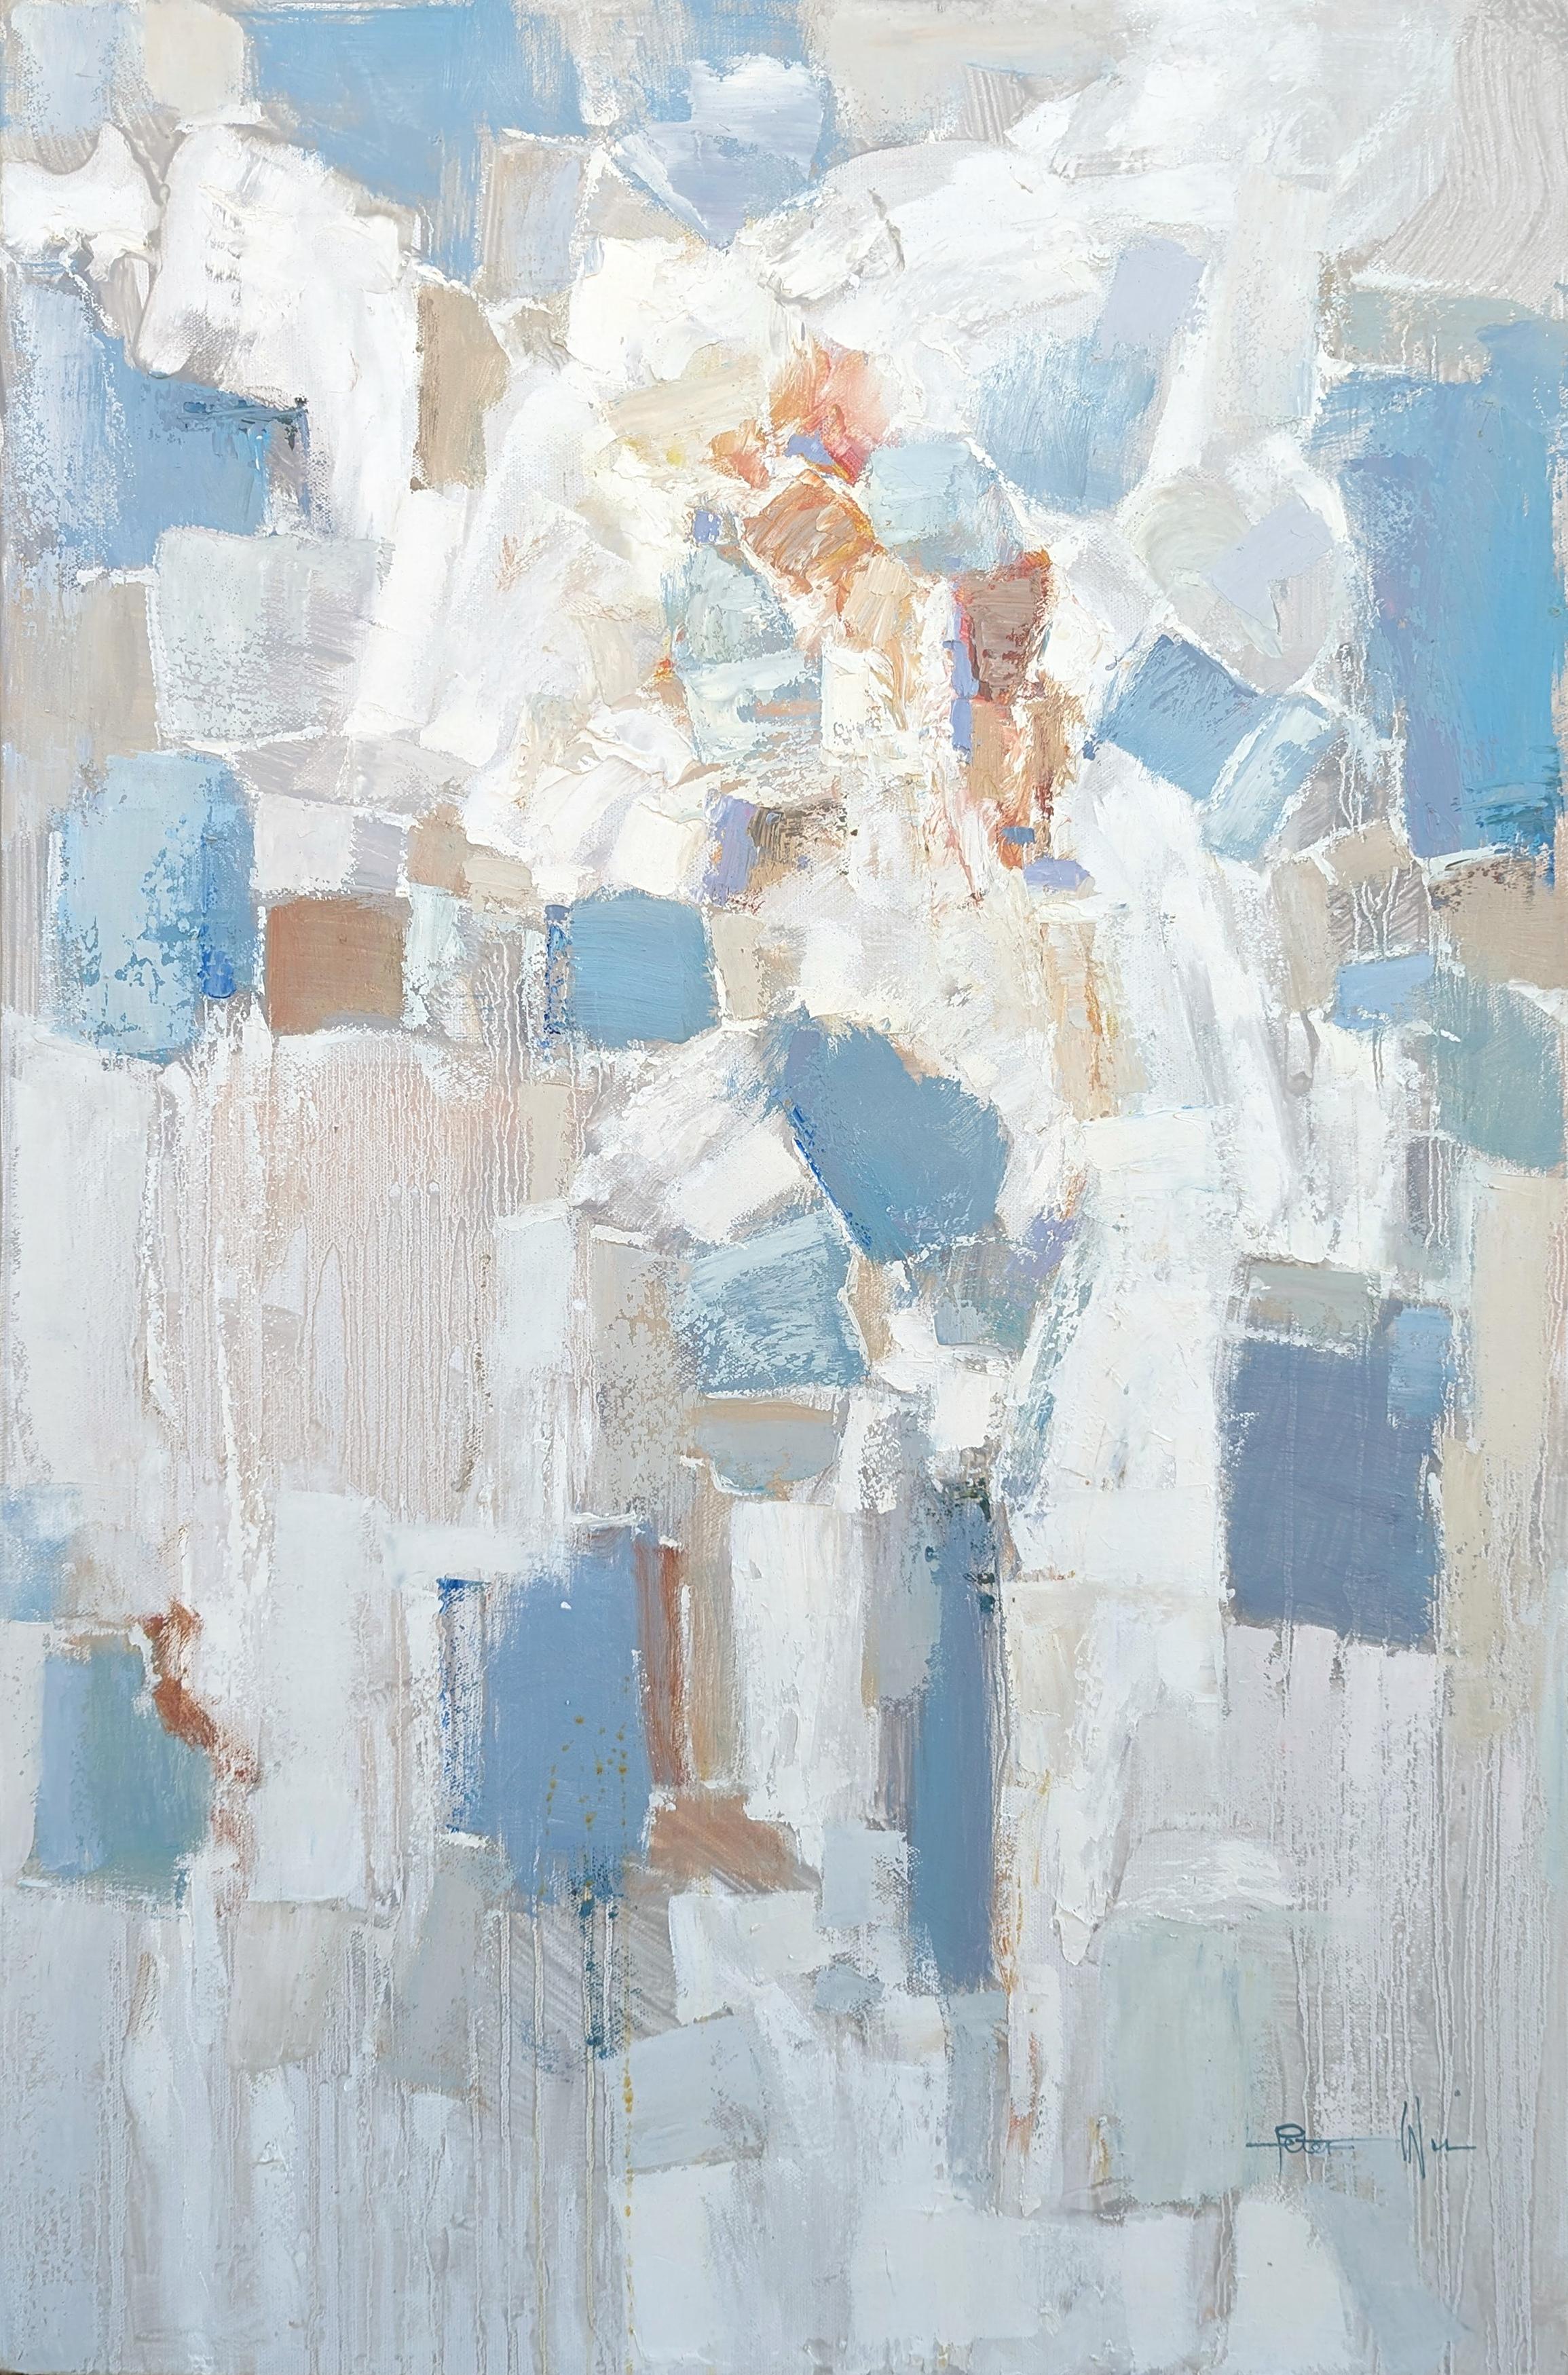 Abstract Painting Peter Wu - « Prière lumineuse » - Grande peinture abstraite contemporaine aux tons pastel